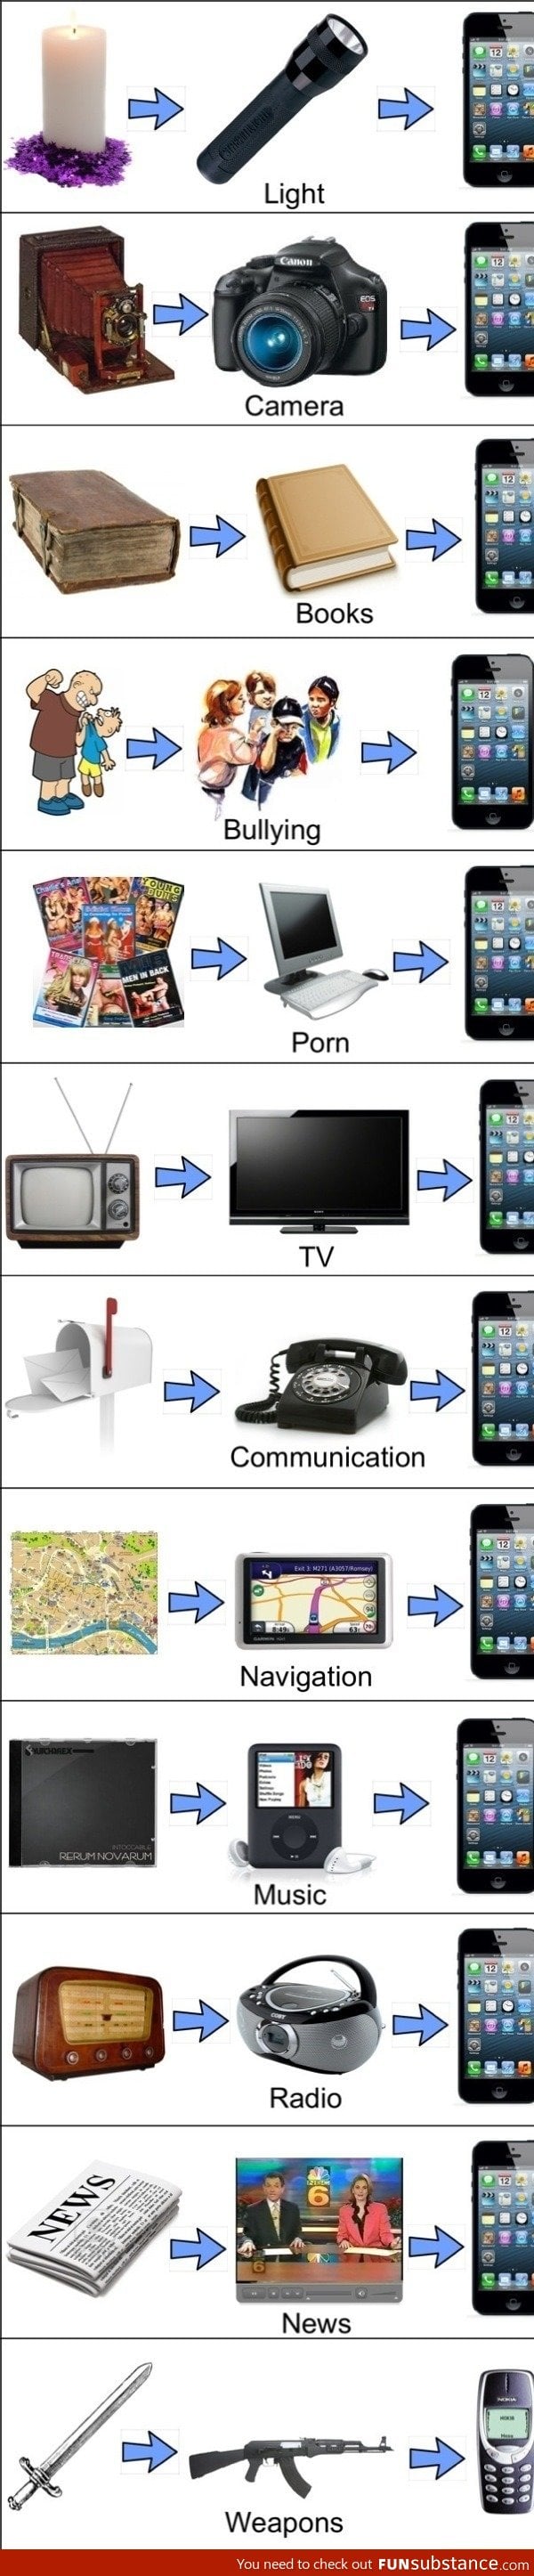 Evolution of tech